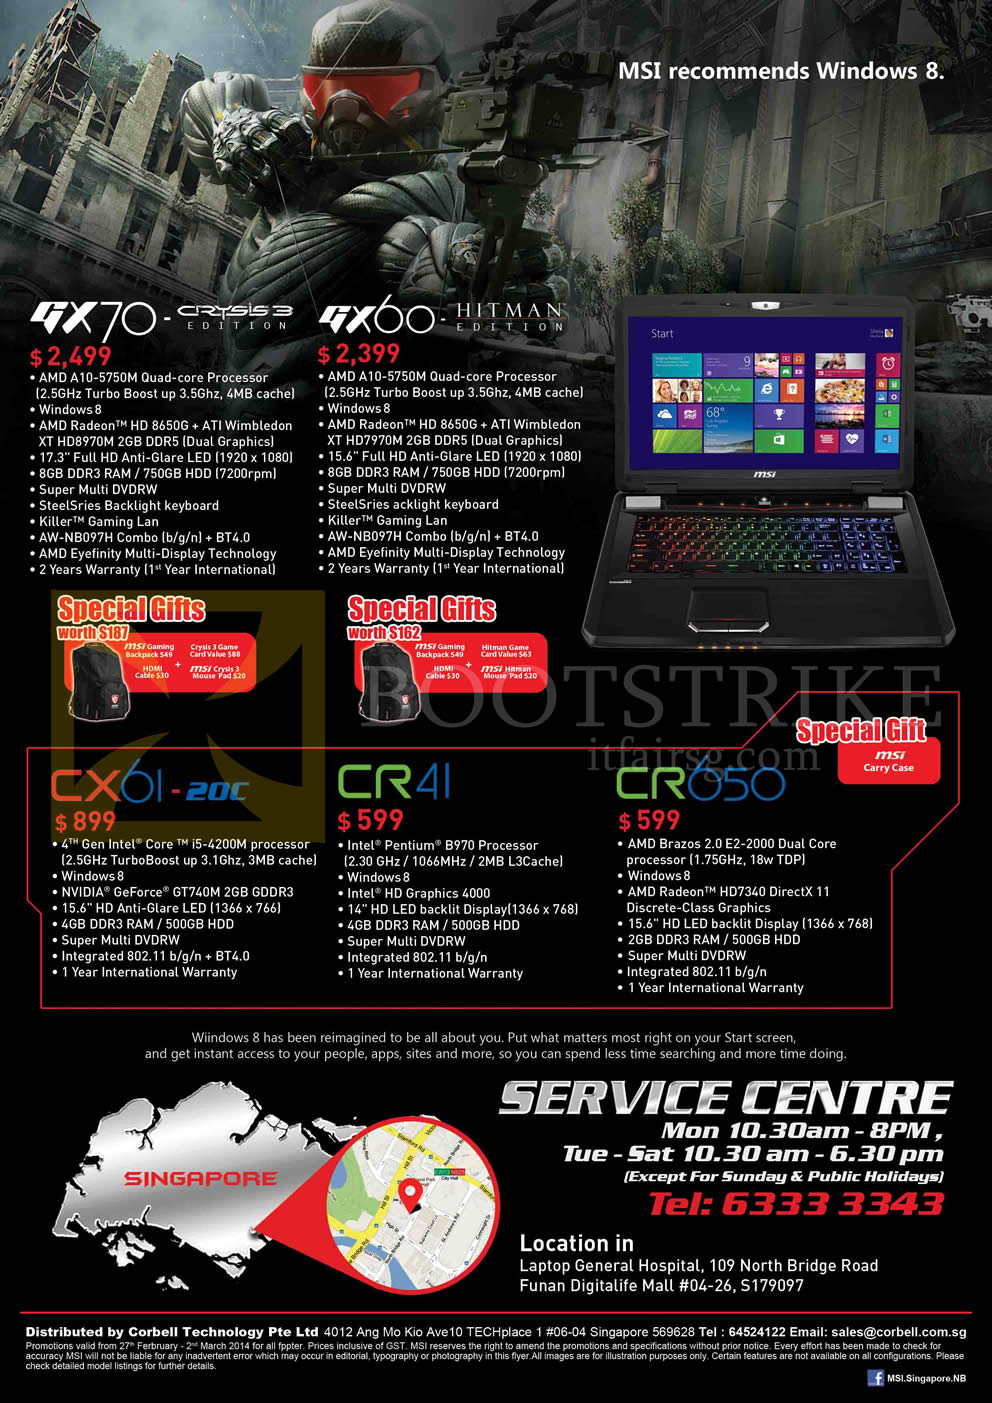 IT SHOW 2014 price list image brochure of MSI Notebooks GX70, GX60, CX61-20C, CR41, CR650